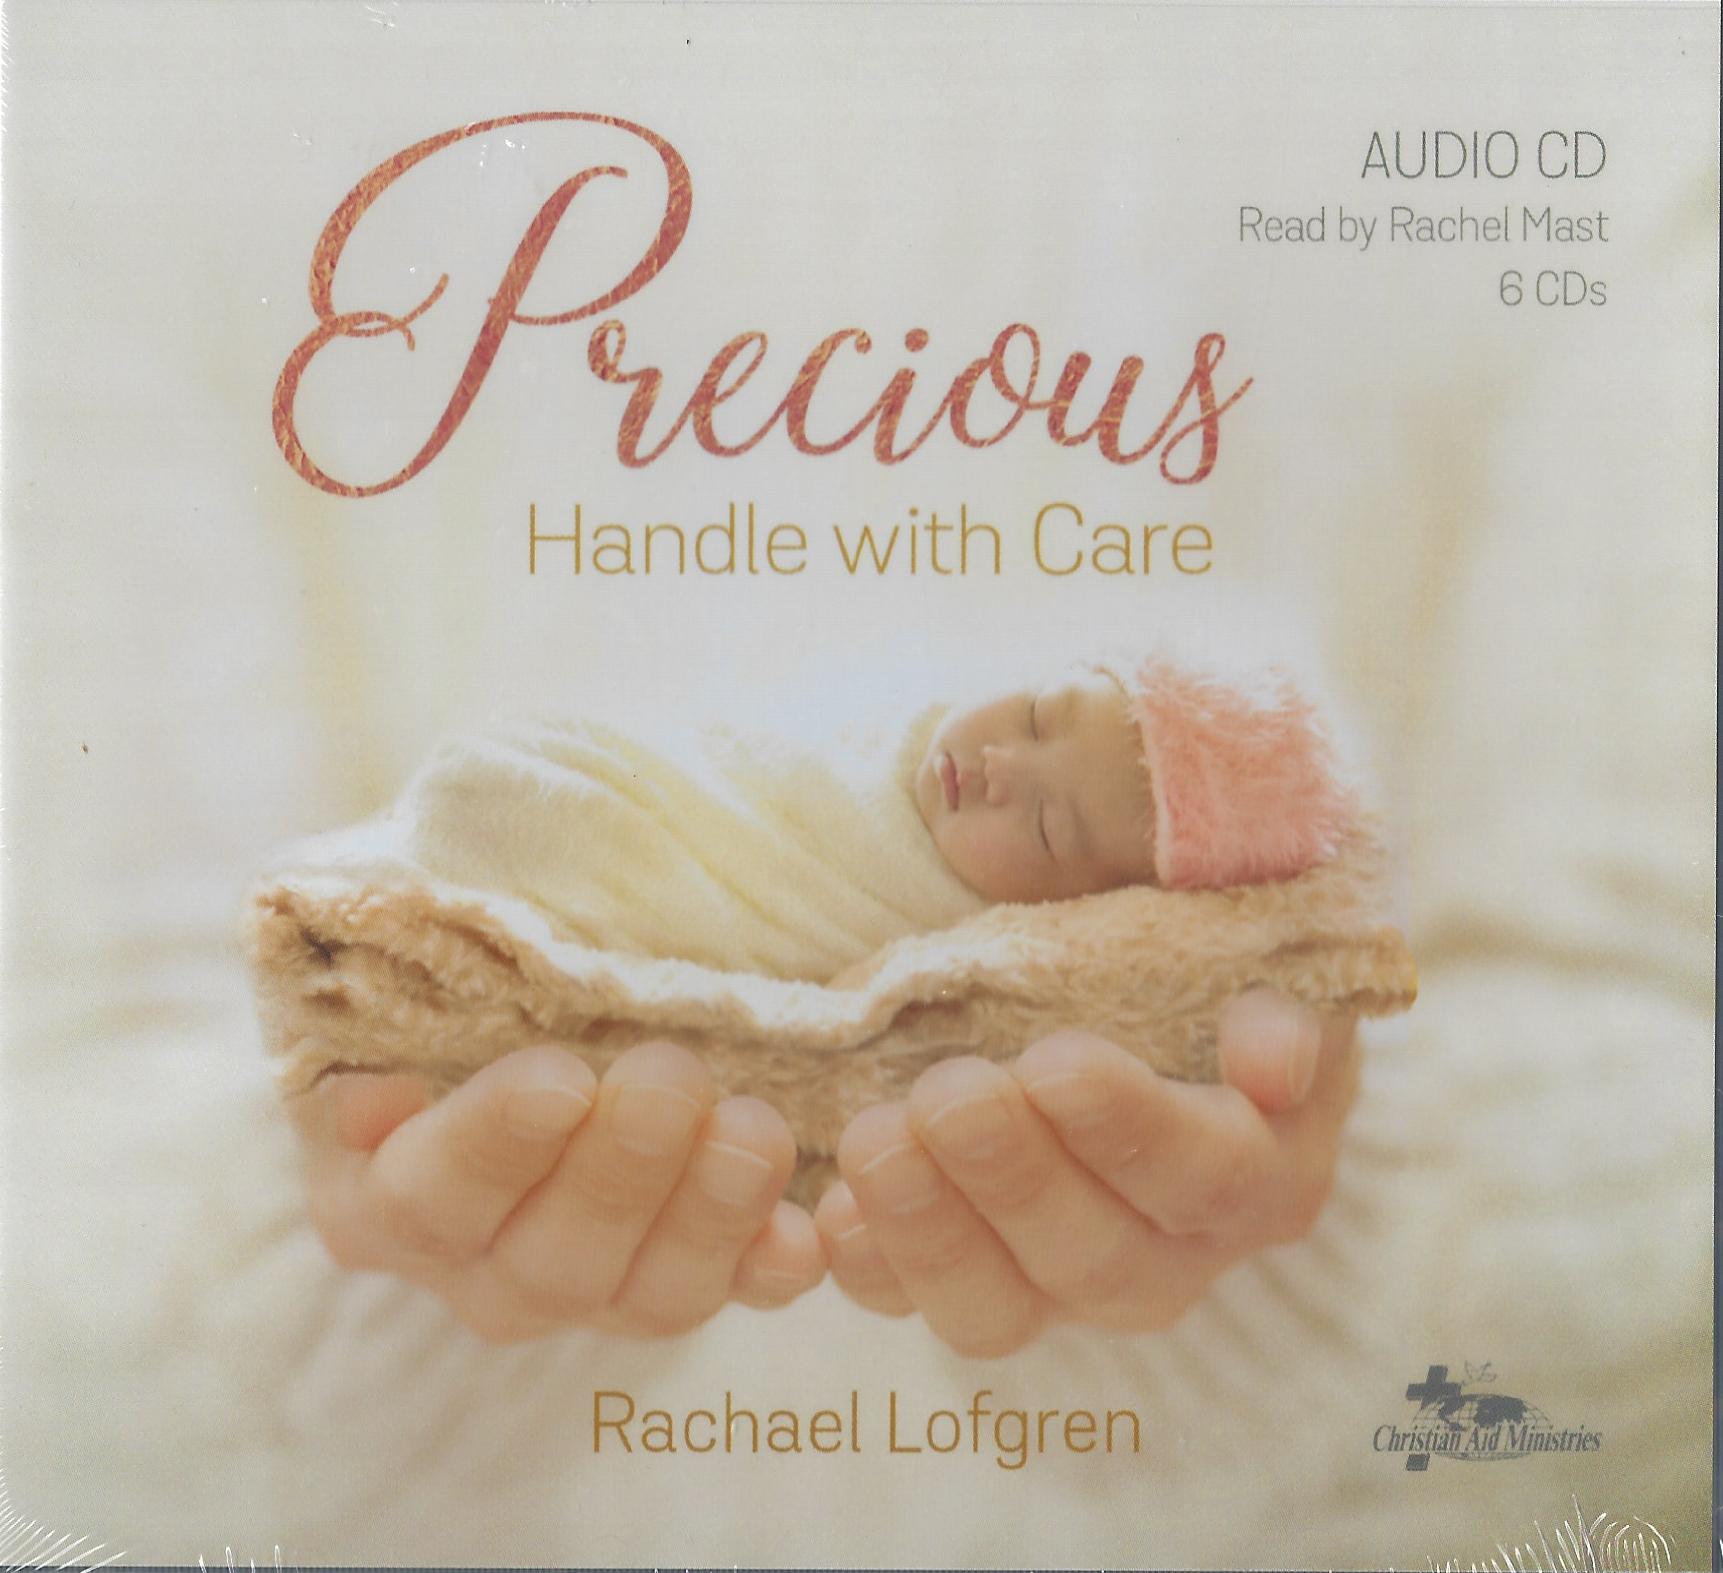 PRECIOUS: HANDLE WITH CARE - AUDIO CD Rachel Lofgren - Click Image to Close